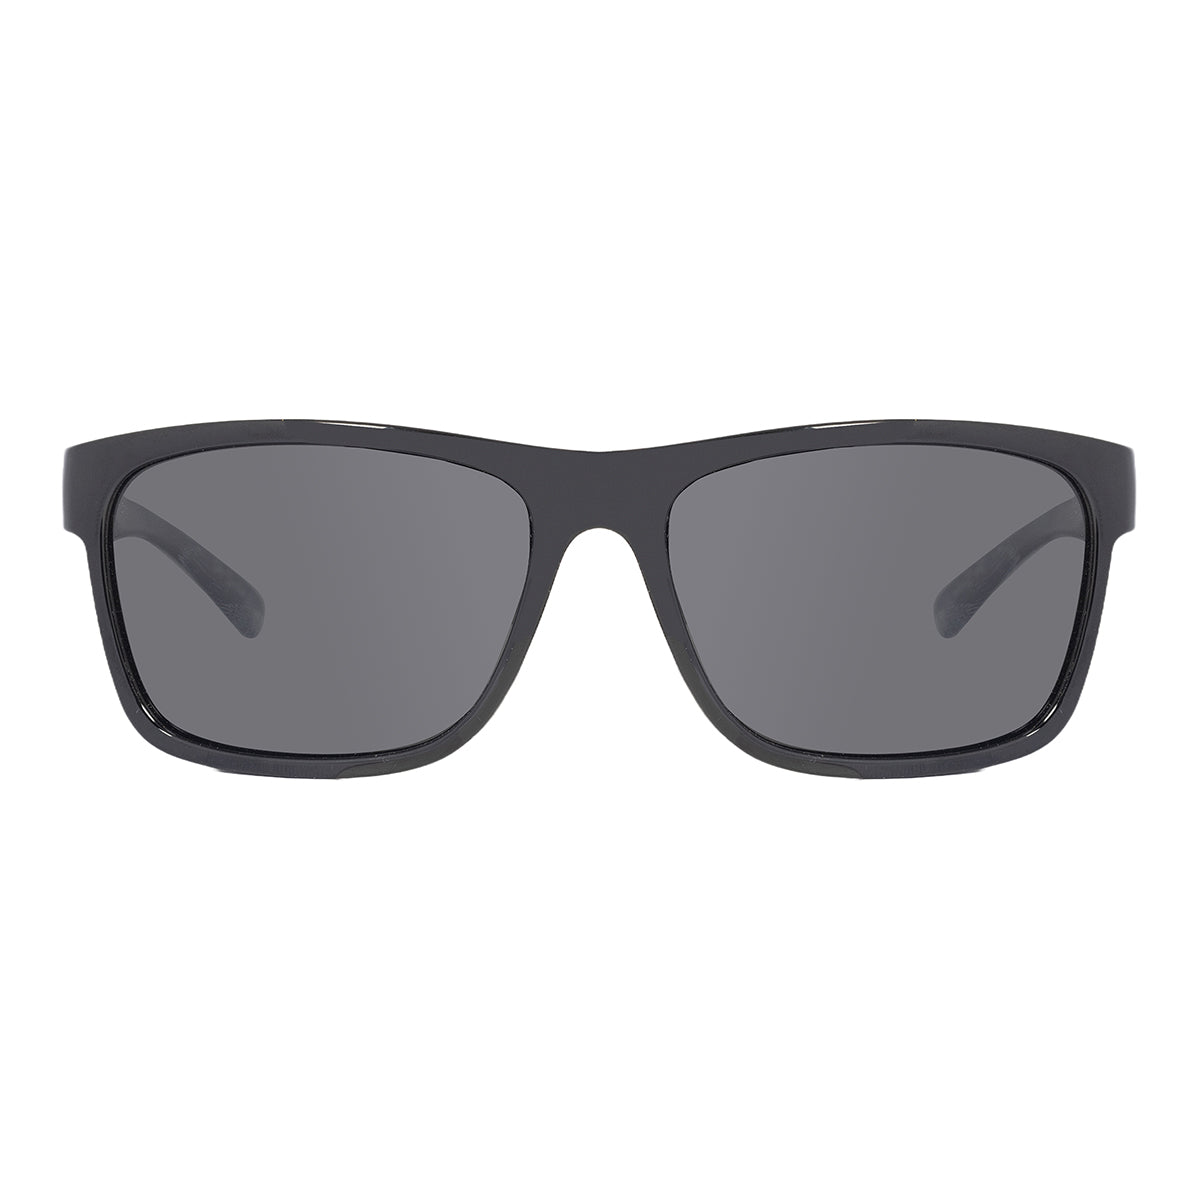 Redan Sunglasses (Polarized Protection)